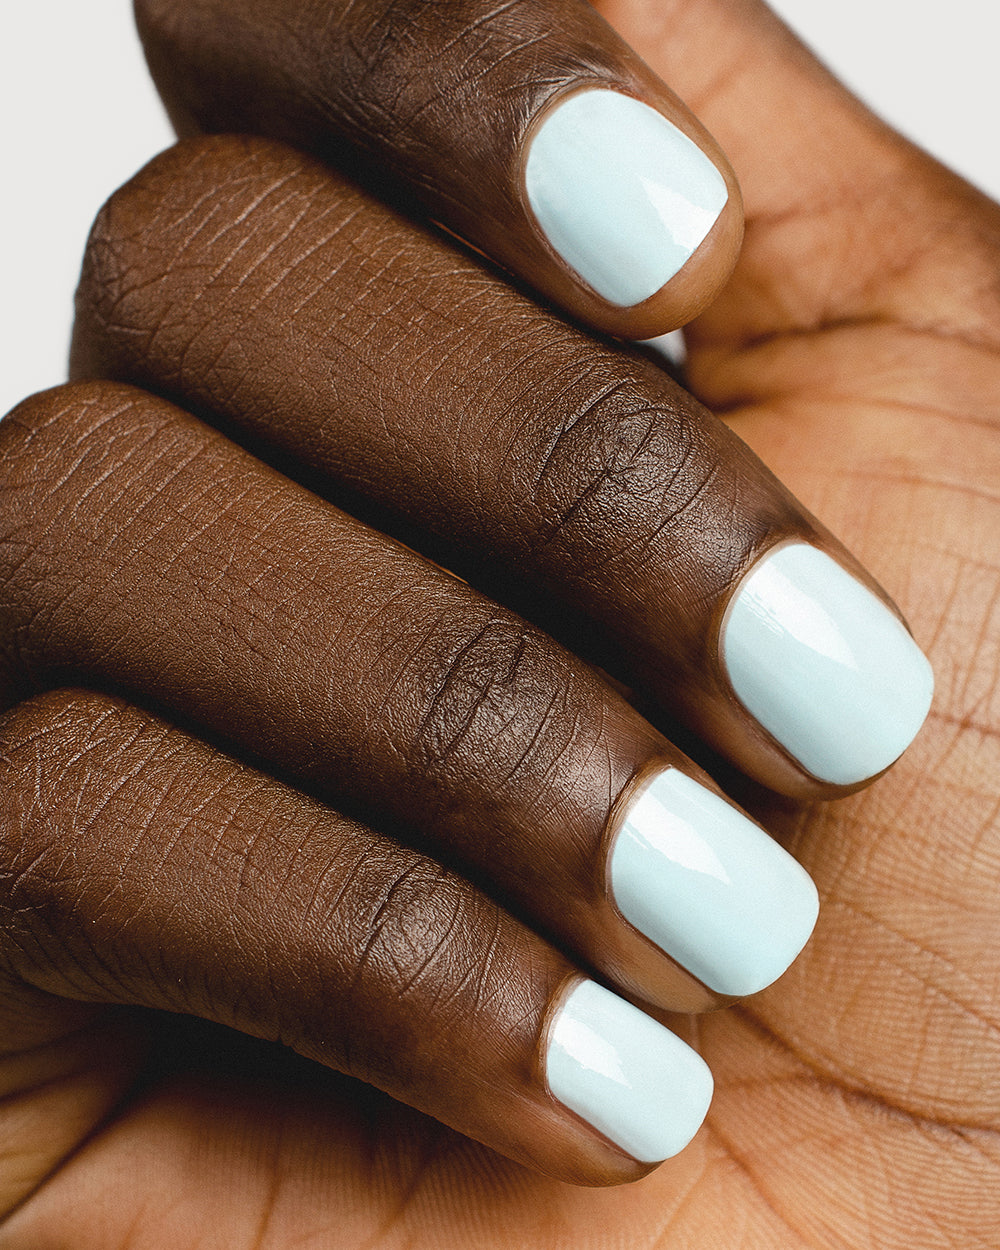 Pastel blue nail polish hand swatch on dark skin tone